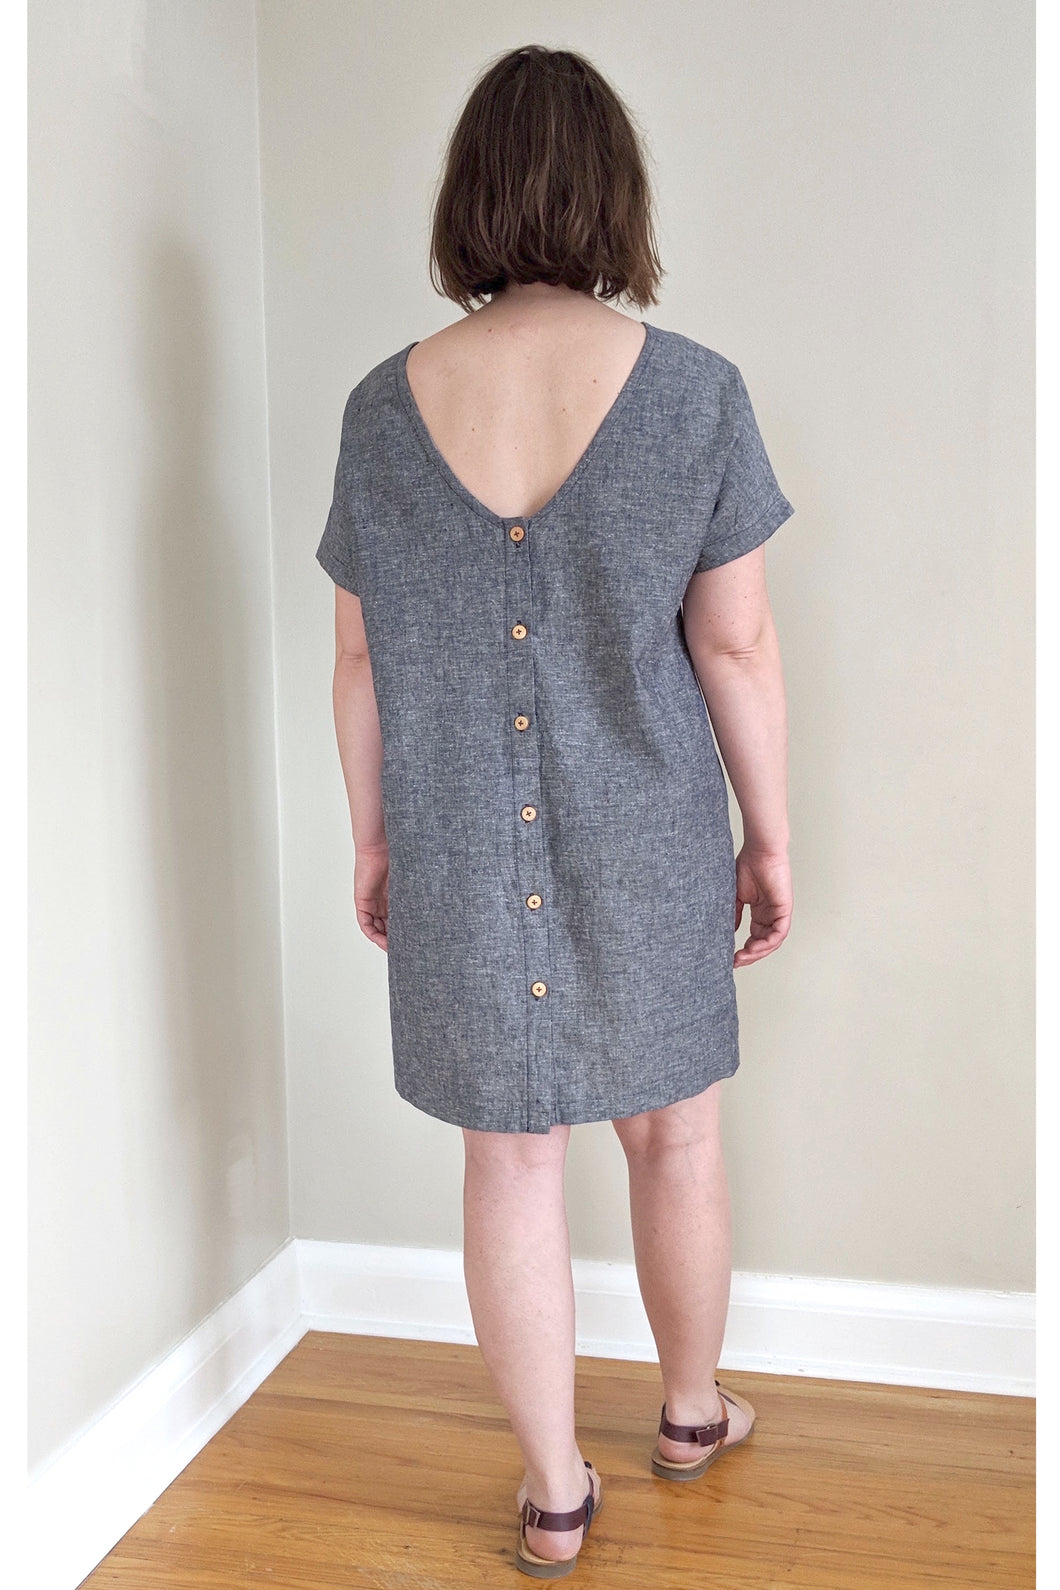 Ingrid Hemp/Organic Cotton Dress - Chambray (sizes S & M)